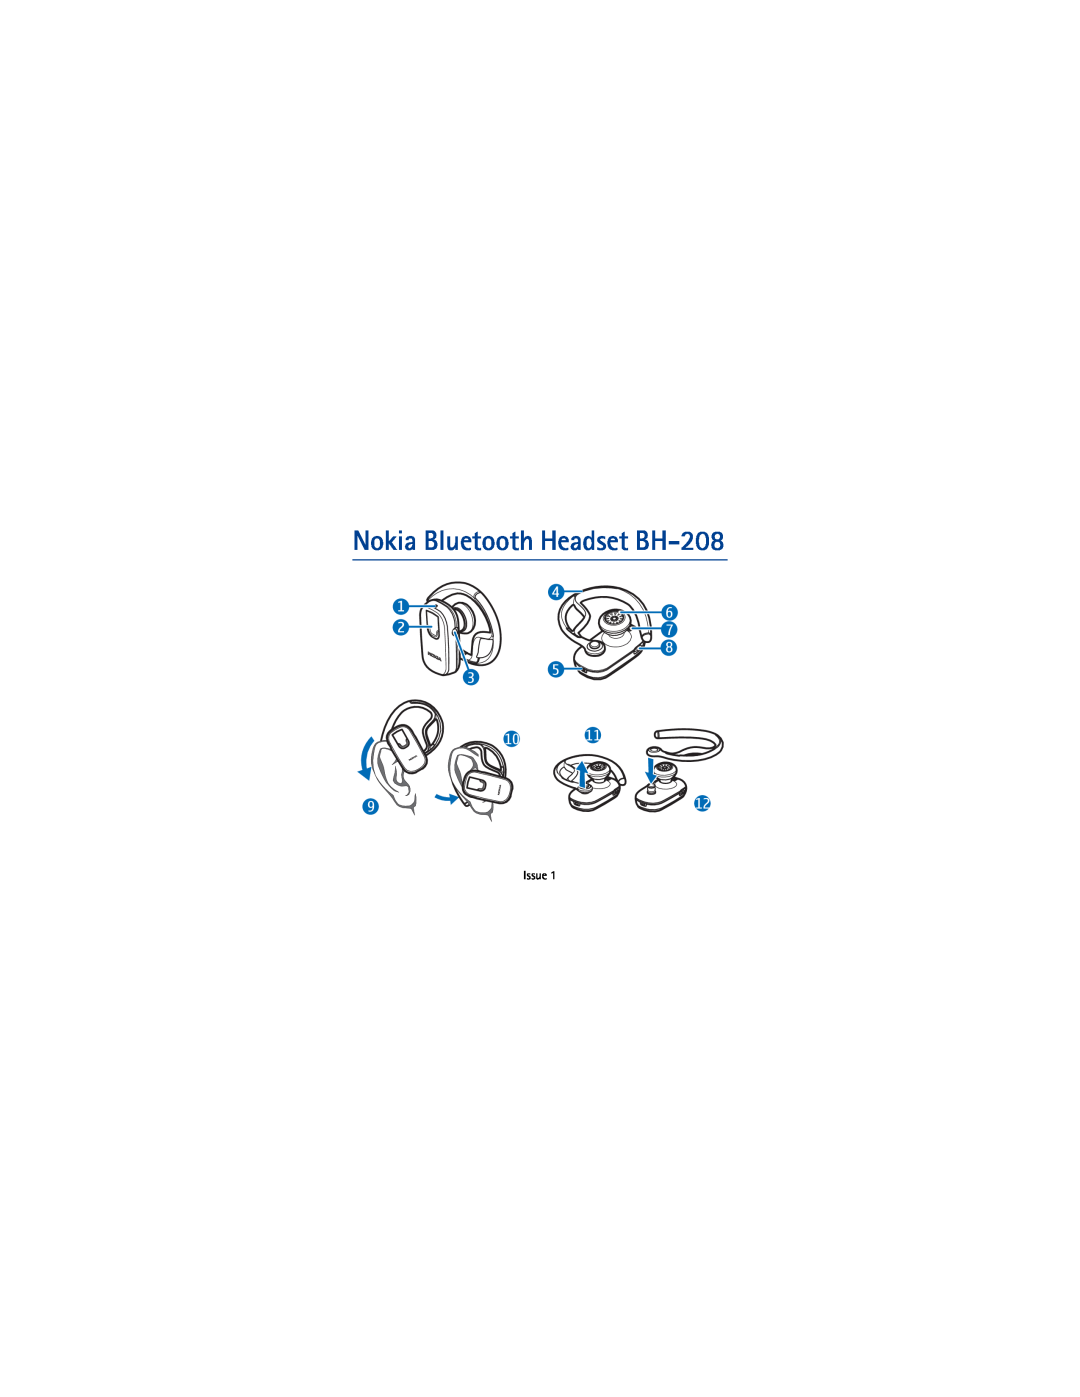 Nokia manual Issue, Nokia Bluetooth Headset BH-208 